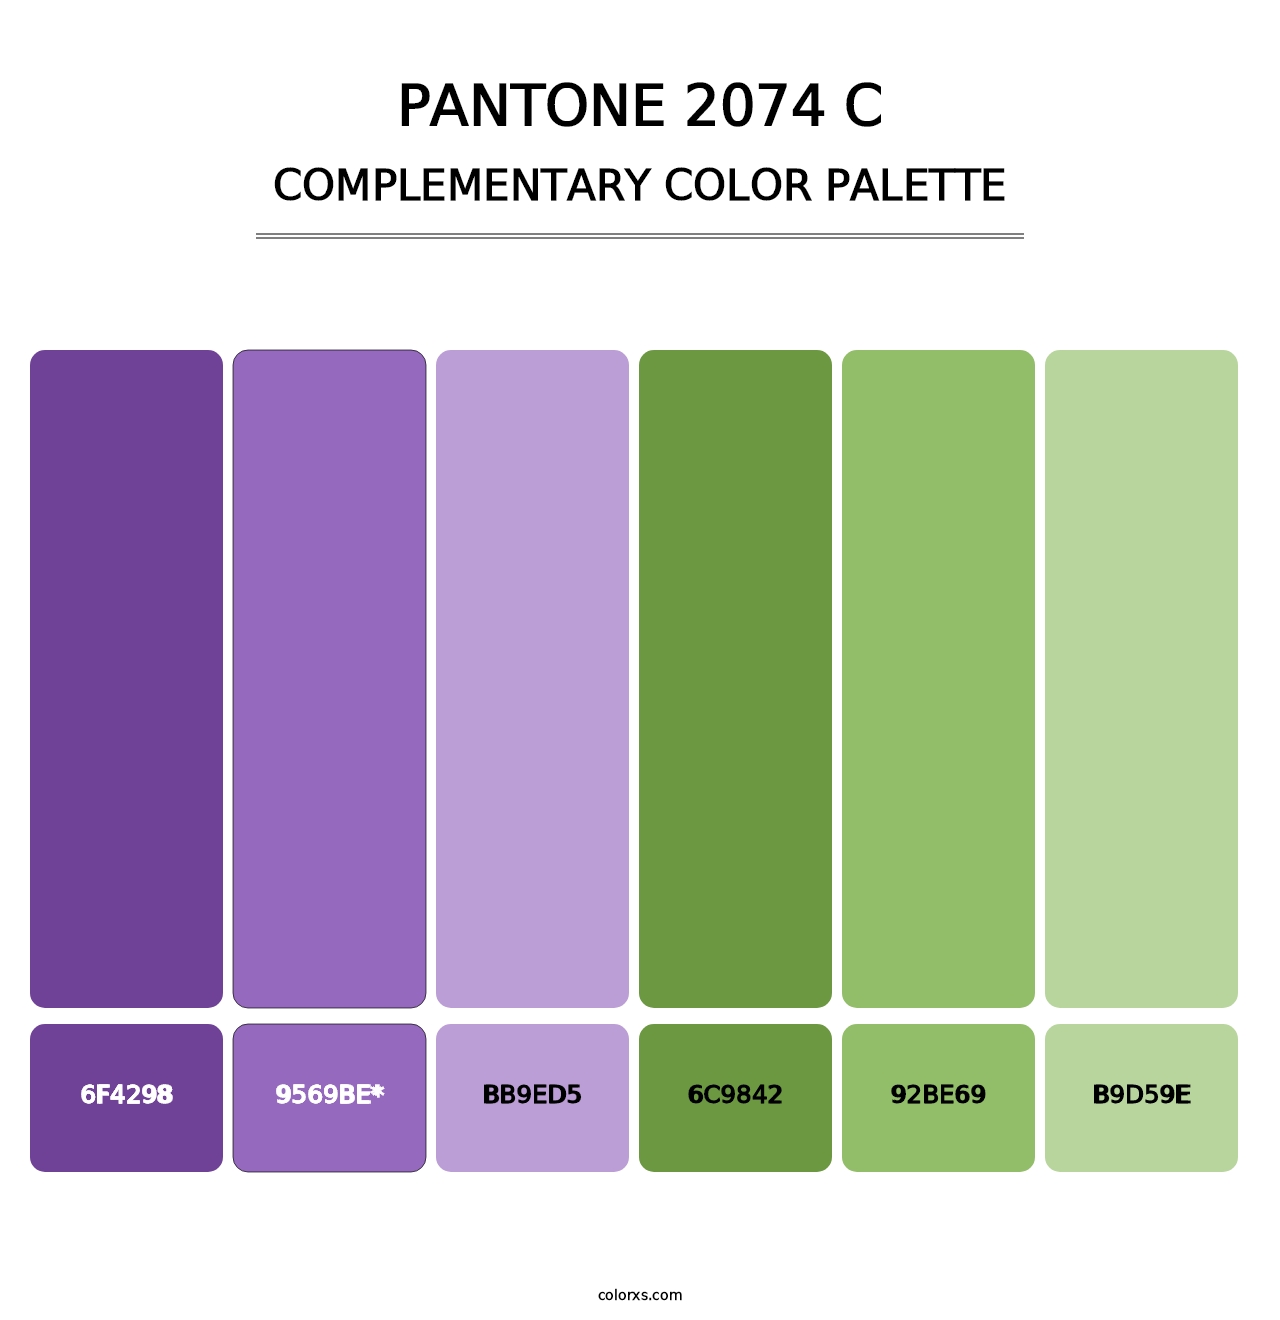 PANTONE 2074 C - Complementary Color Palette